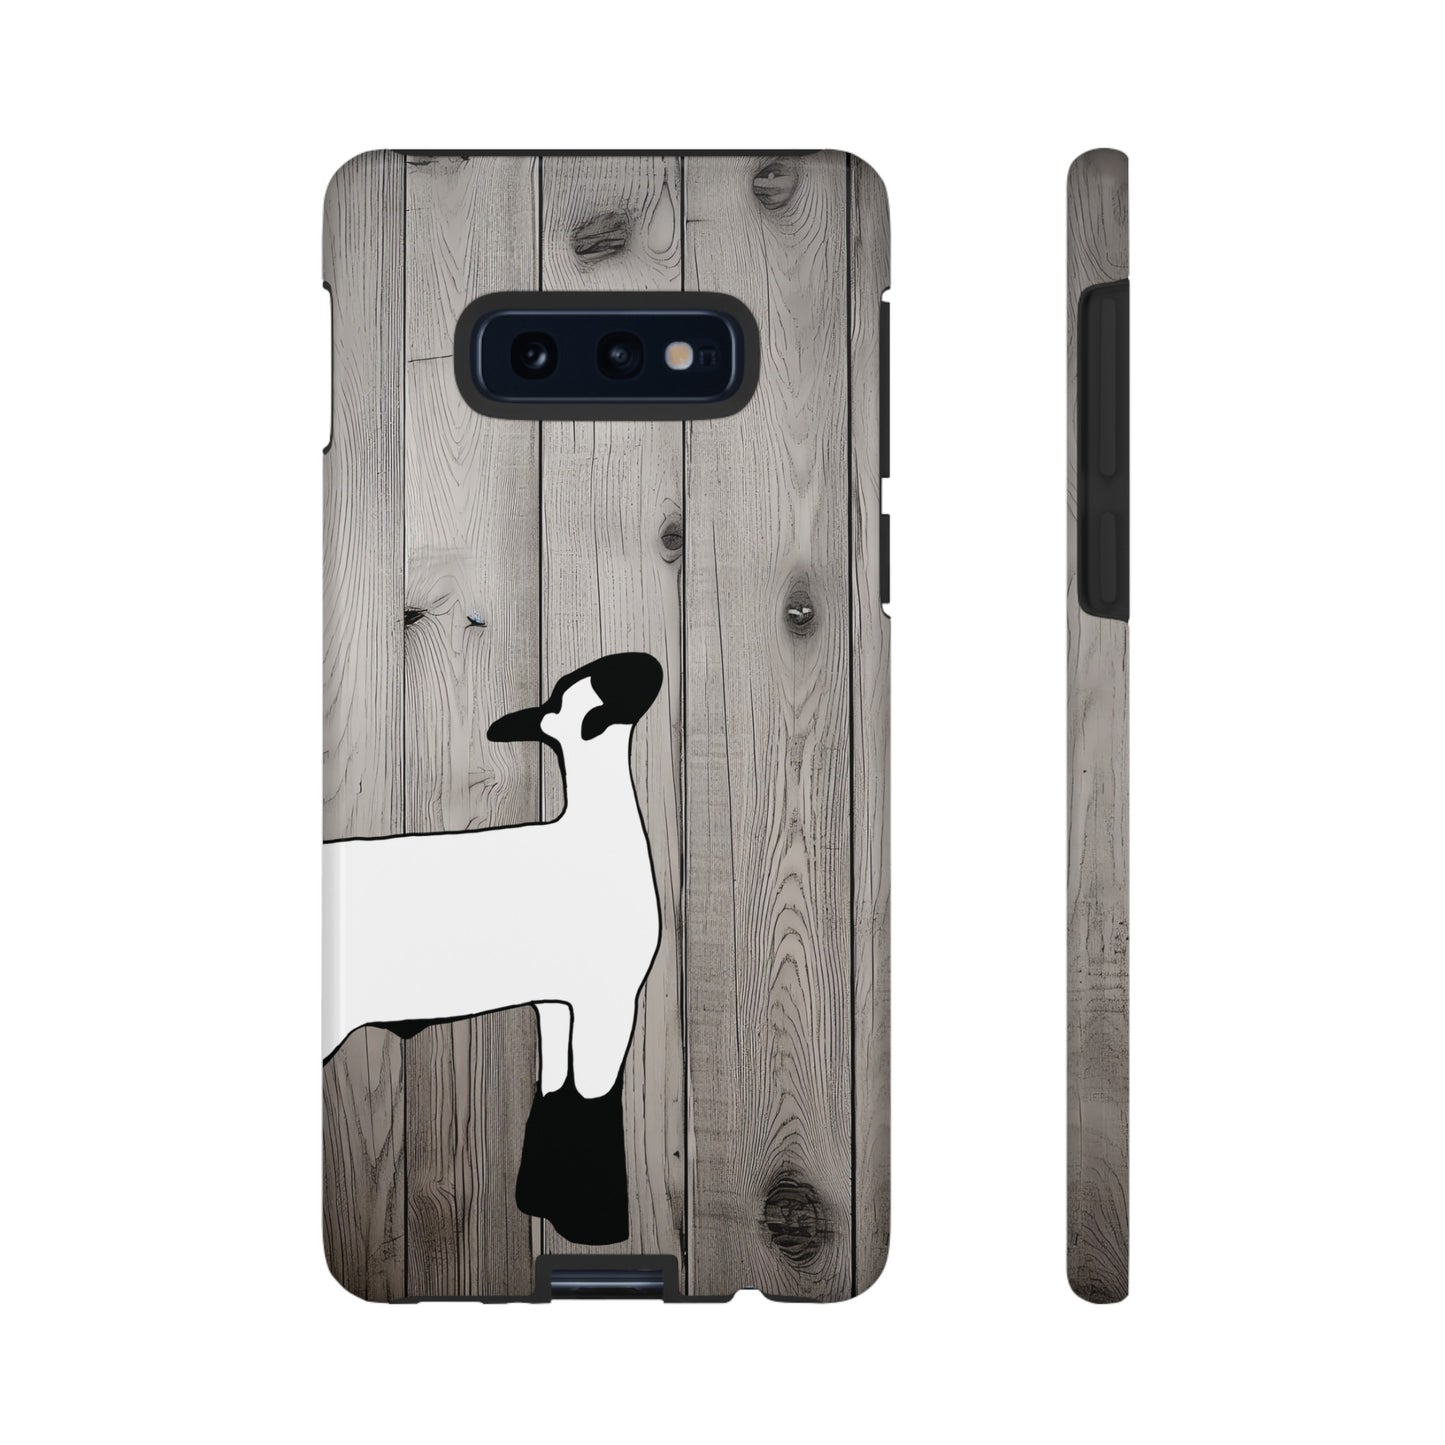 Livestock Show Lamb - Android Lamb Phone Cases - Show Sheep